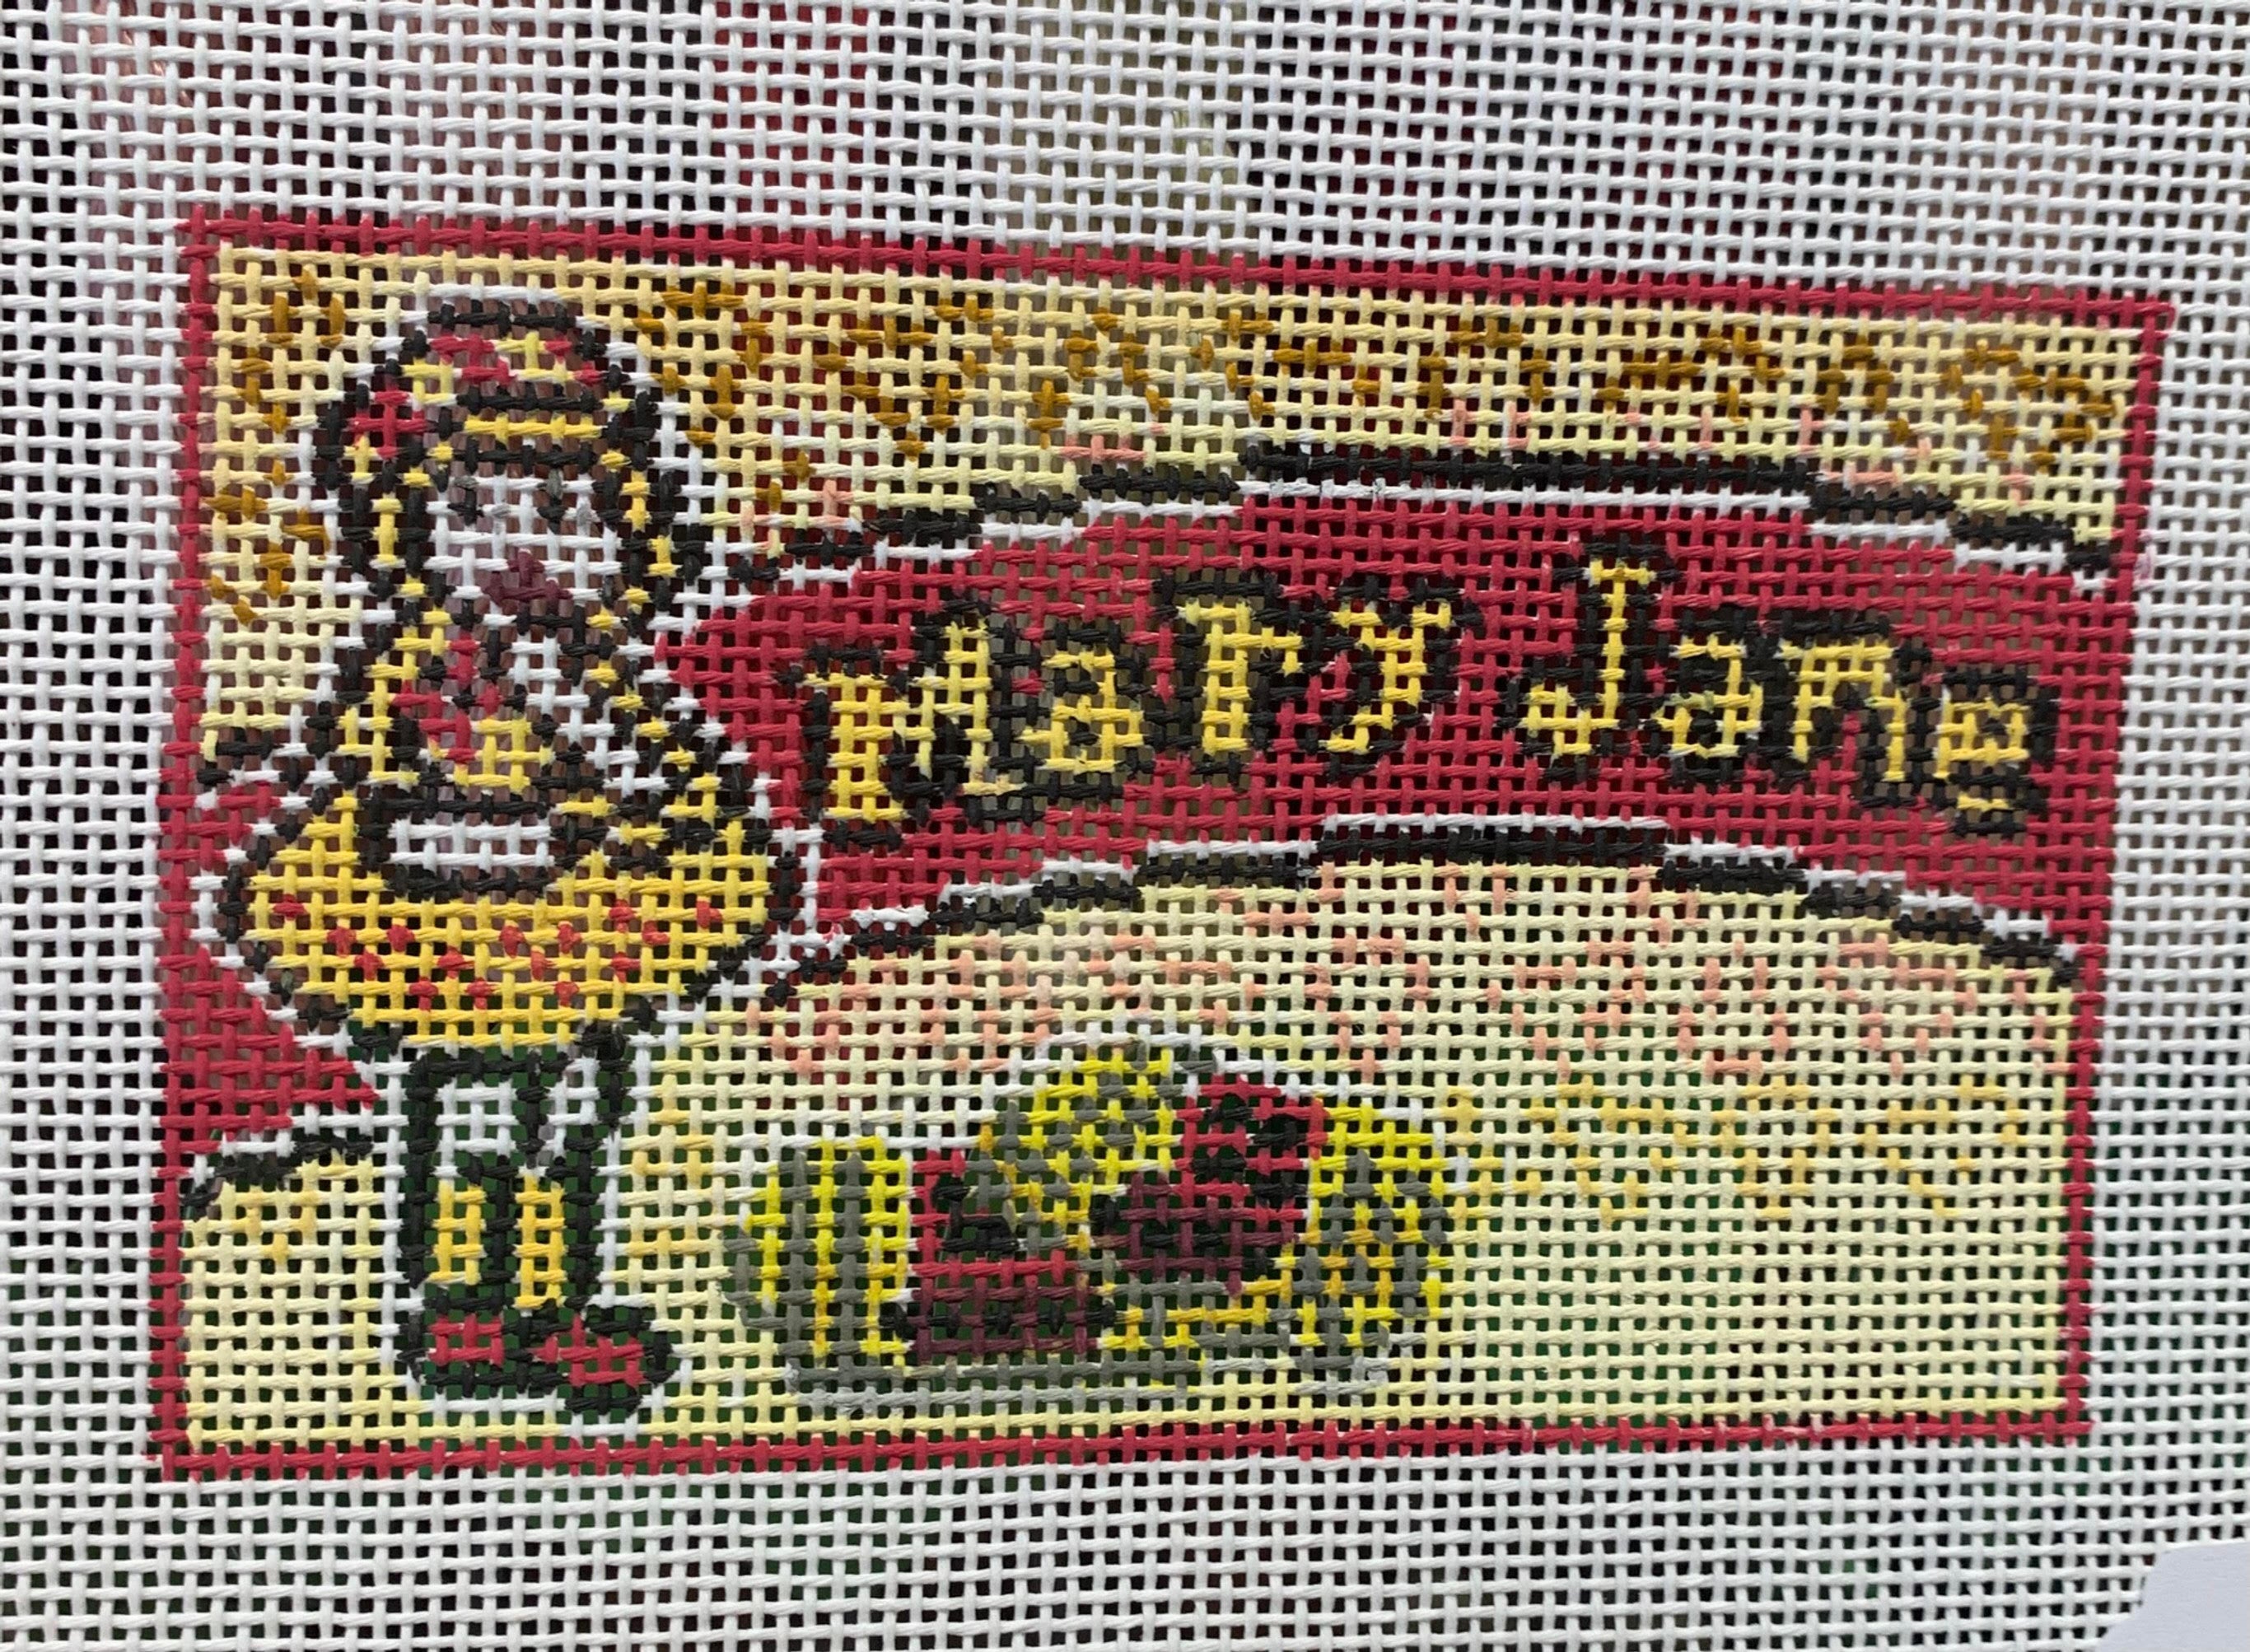 Needle Arts Studio 13 mesh Mary Jane